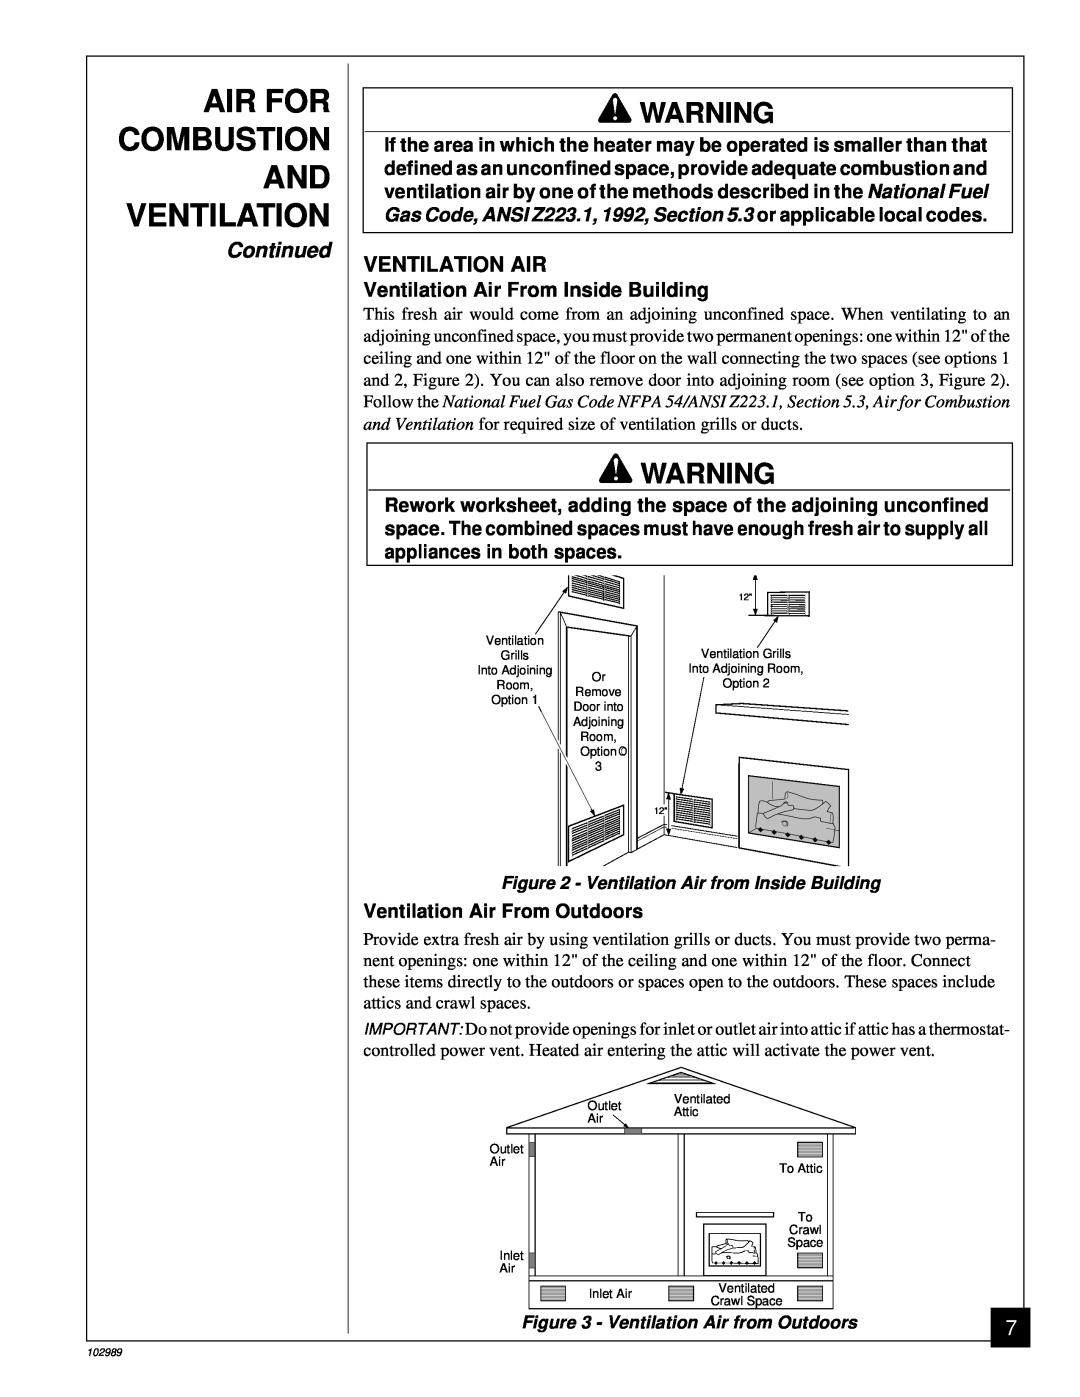 Desa CGS2718P installation manual Air For Combustion And Ventilation, Continued, Ventilation Air From Inside Building 